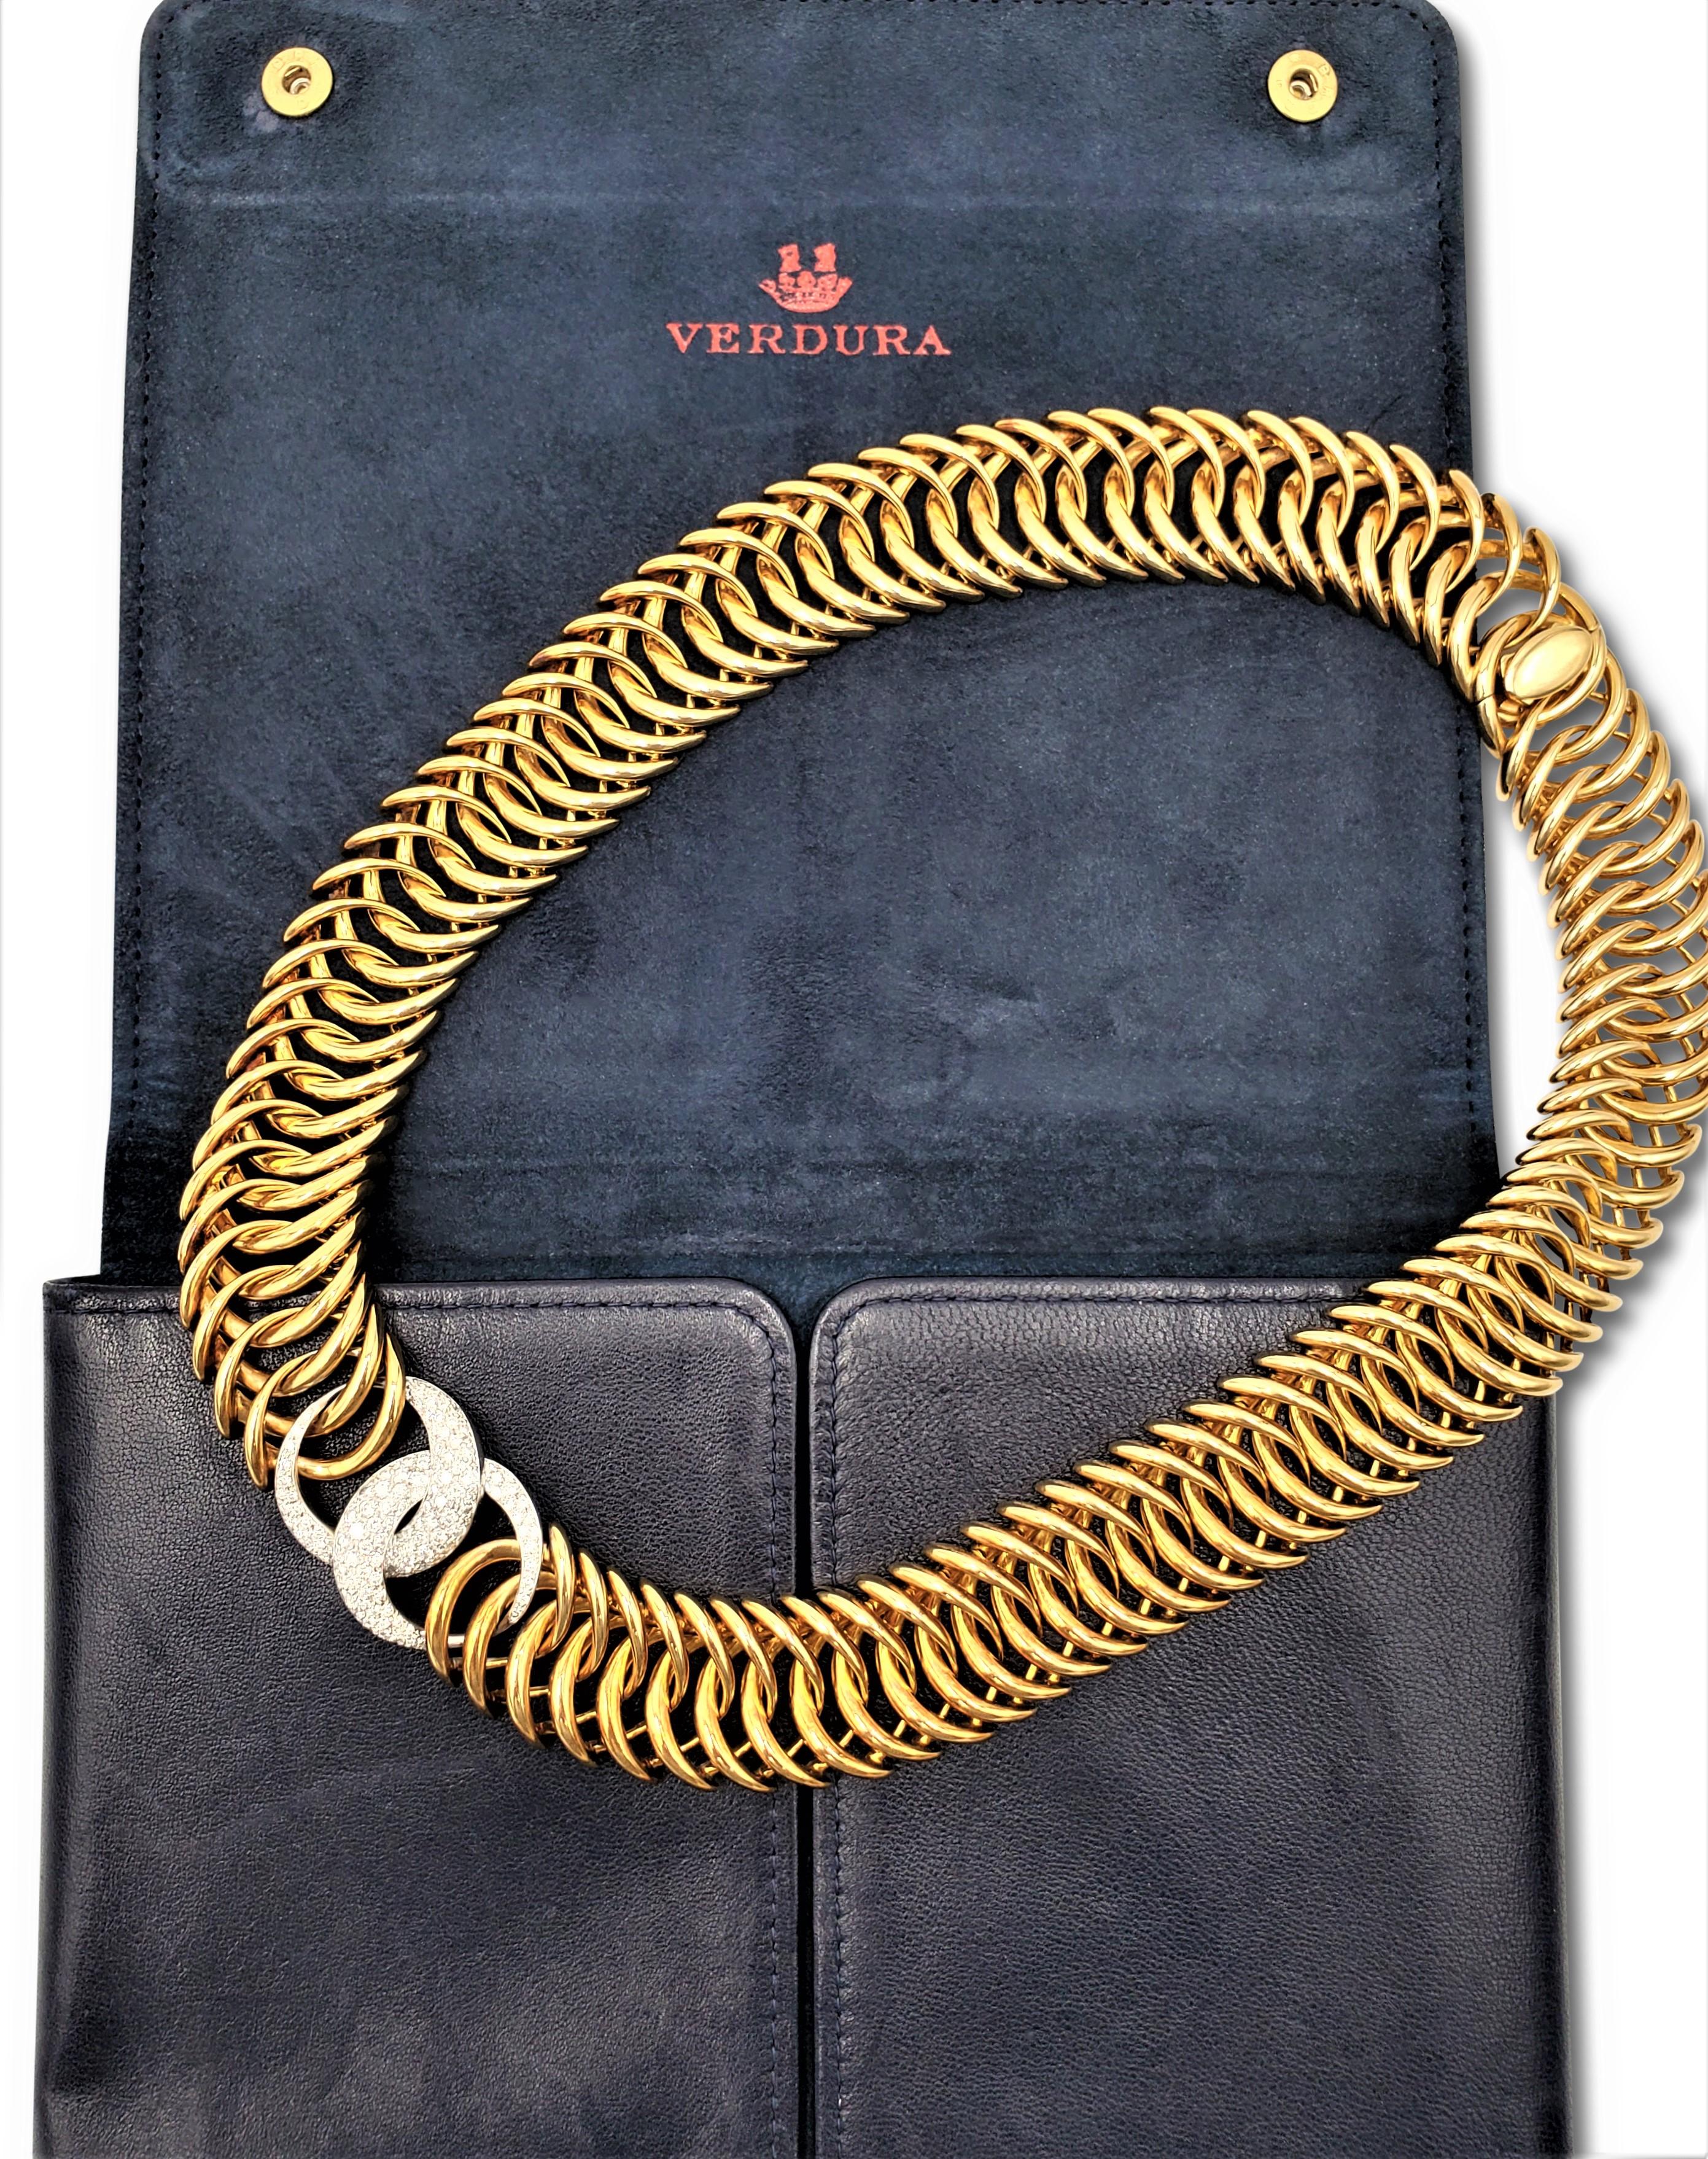 Verdura 'Double Crescent' Diamond Gold Necklace 1